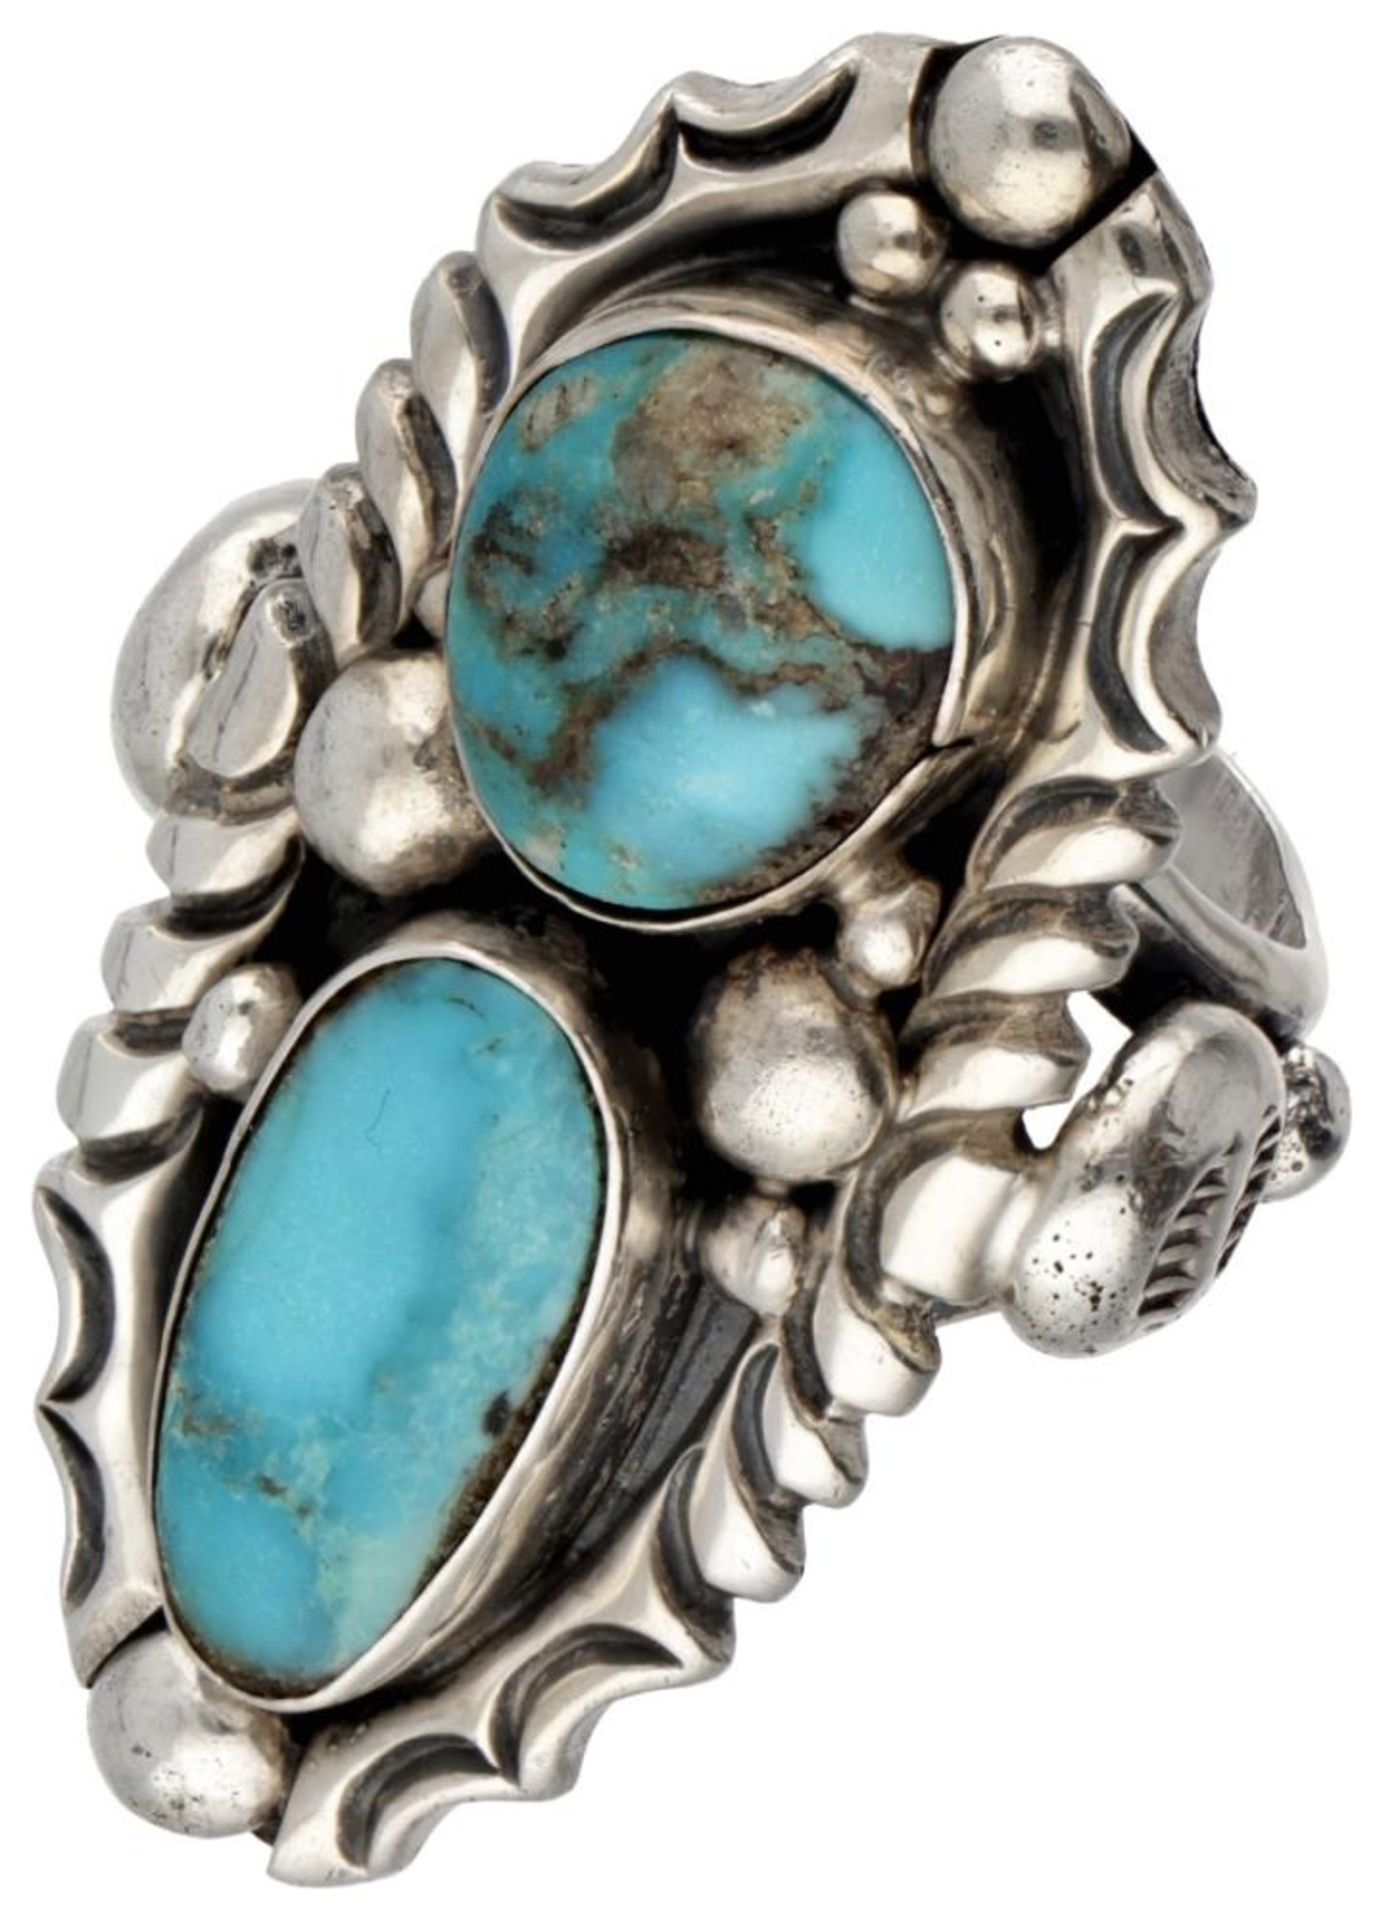 Harold Trujillo Navajo sterling silver Native American turquoise ring. - Image 2 of 6